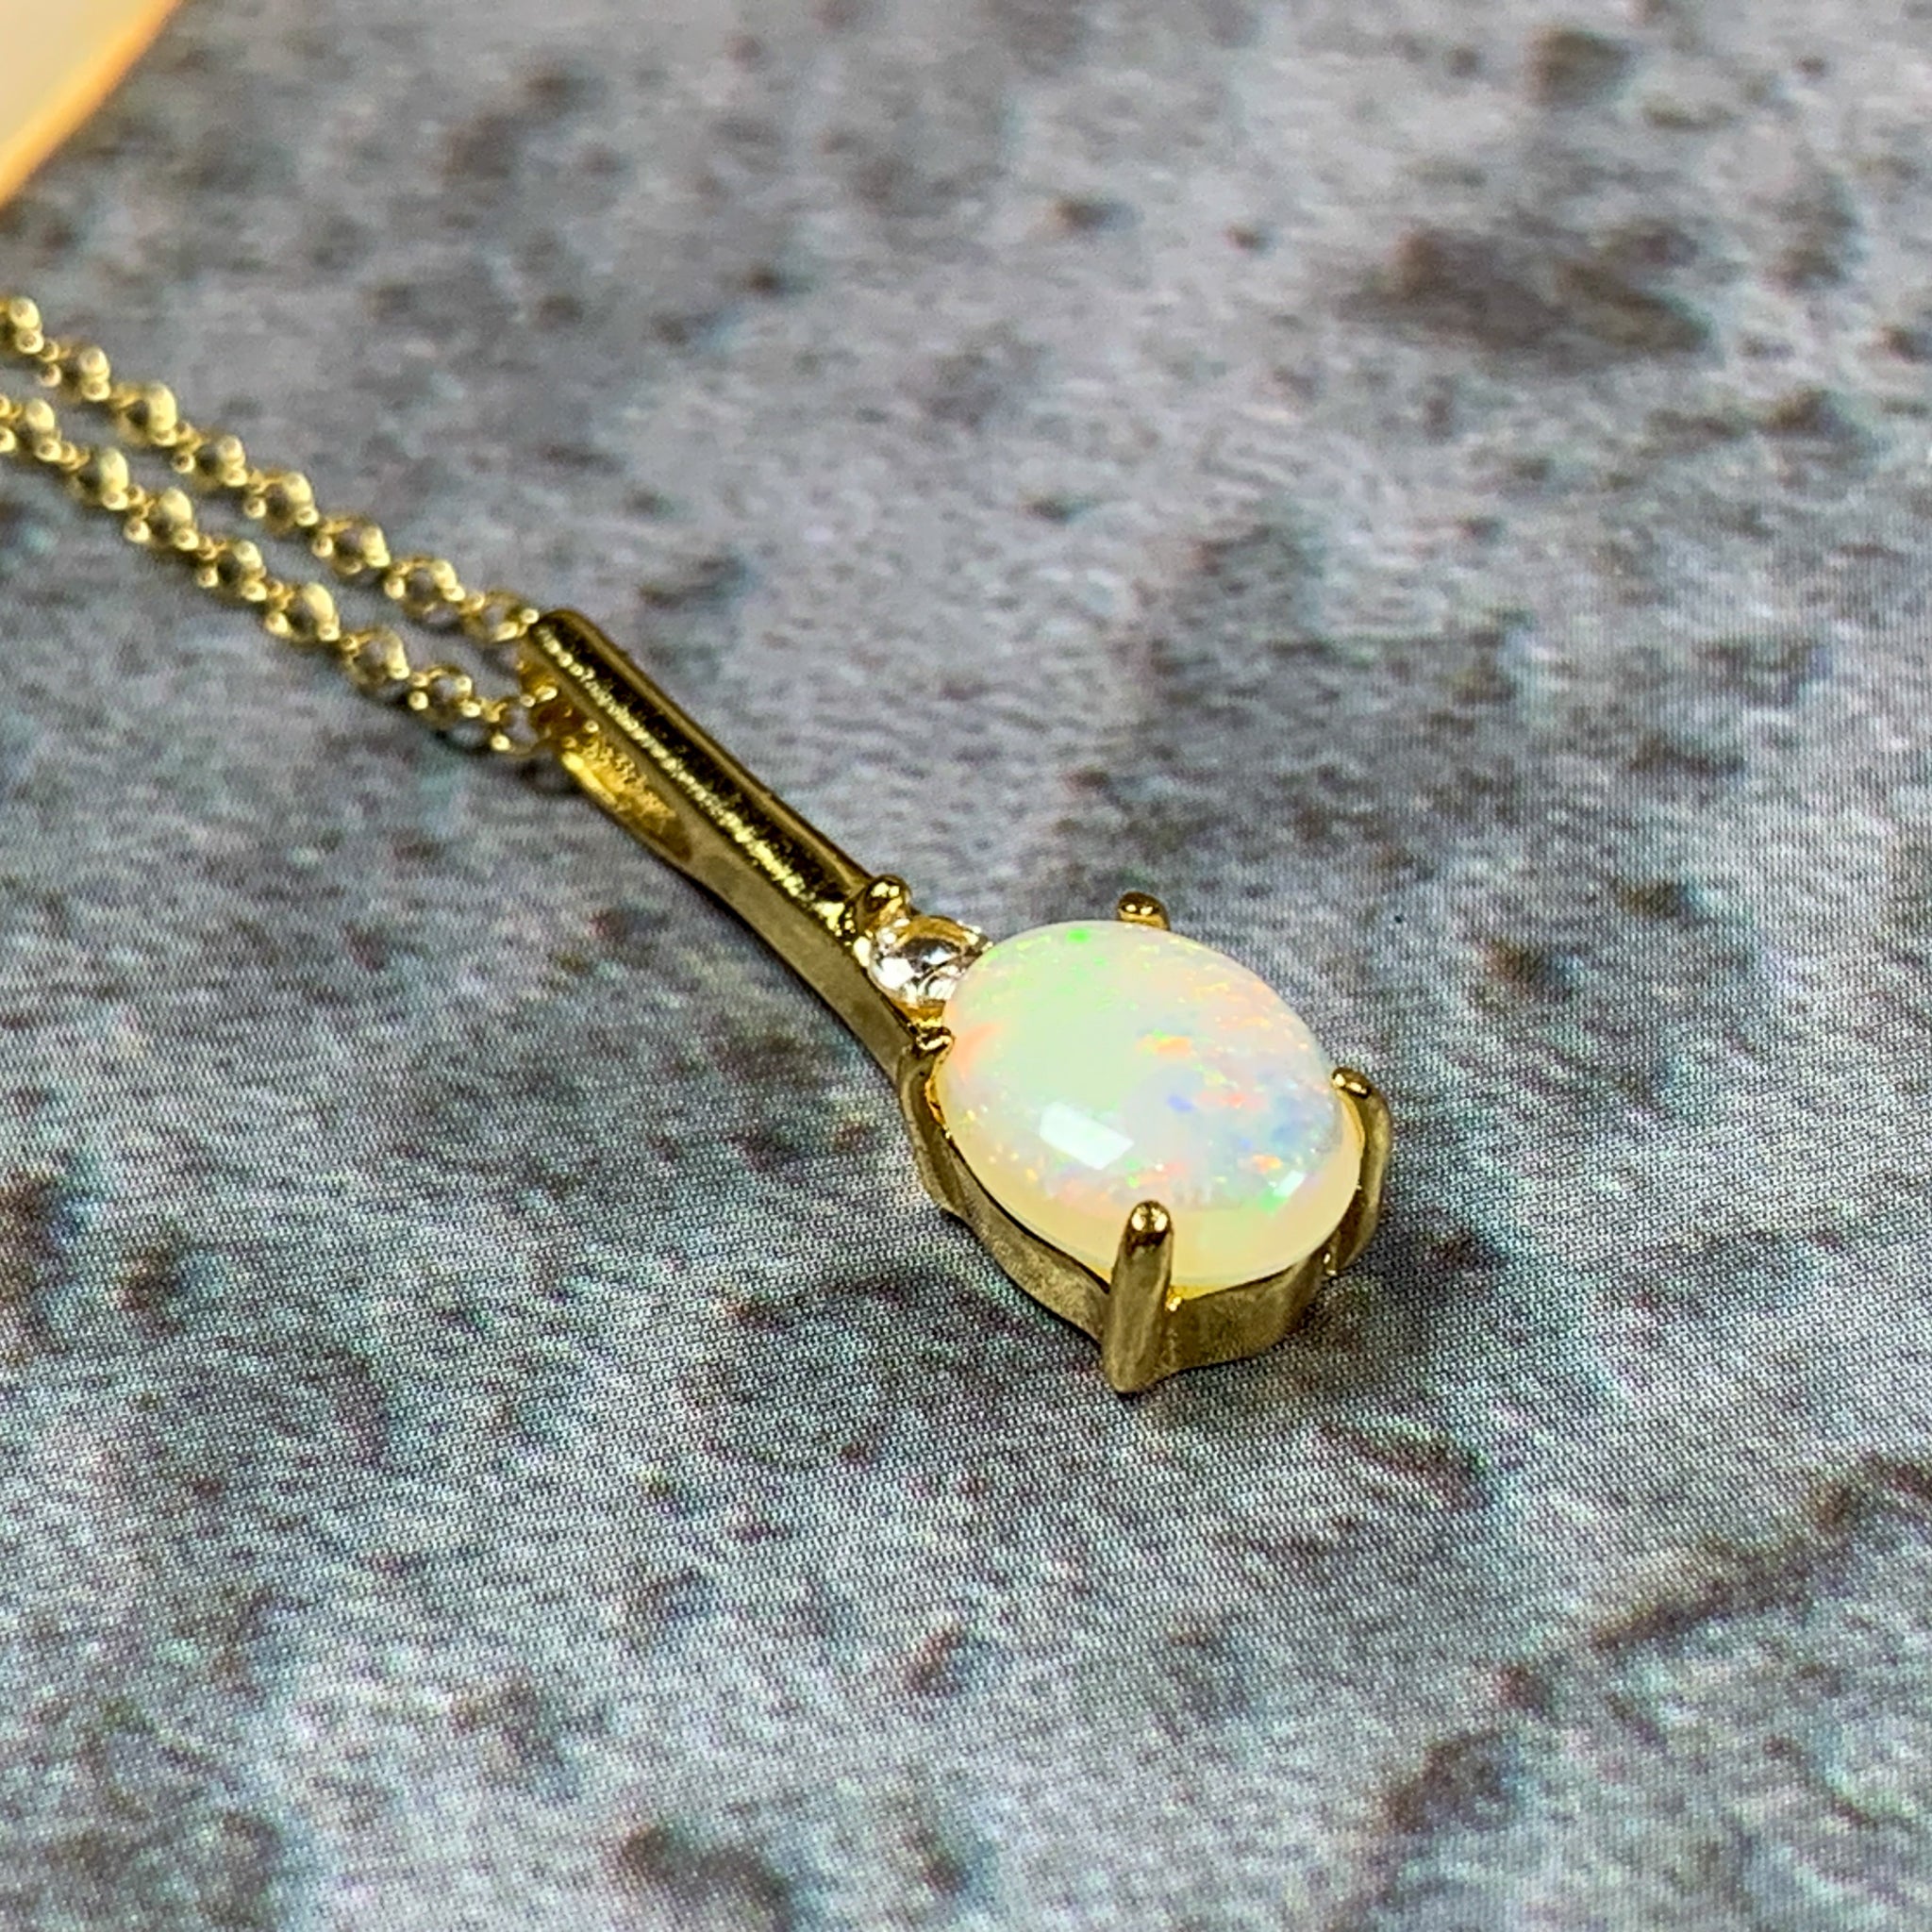 Gold plated drop style 8x6mm White Opal pendant - Masterpiece Jewellery Opal & Gems Sydney Australia | Online Shop